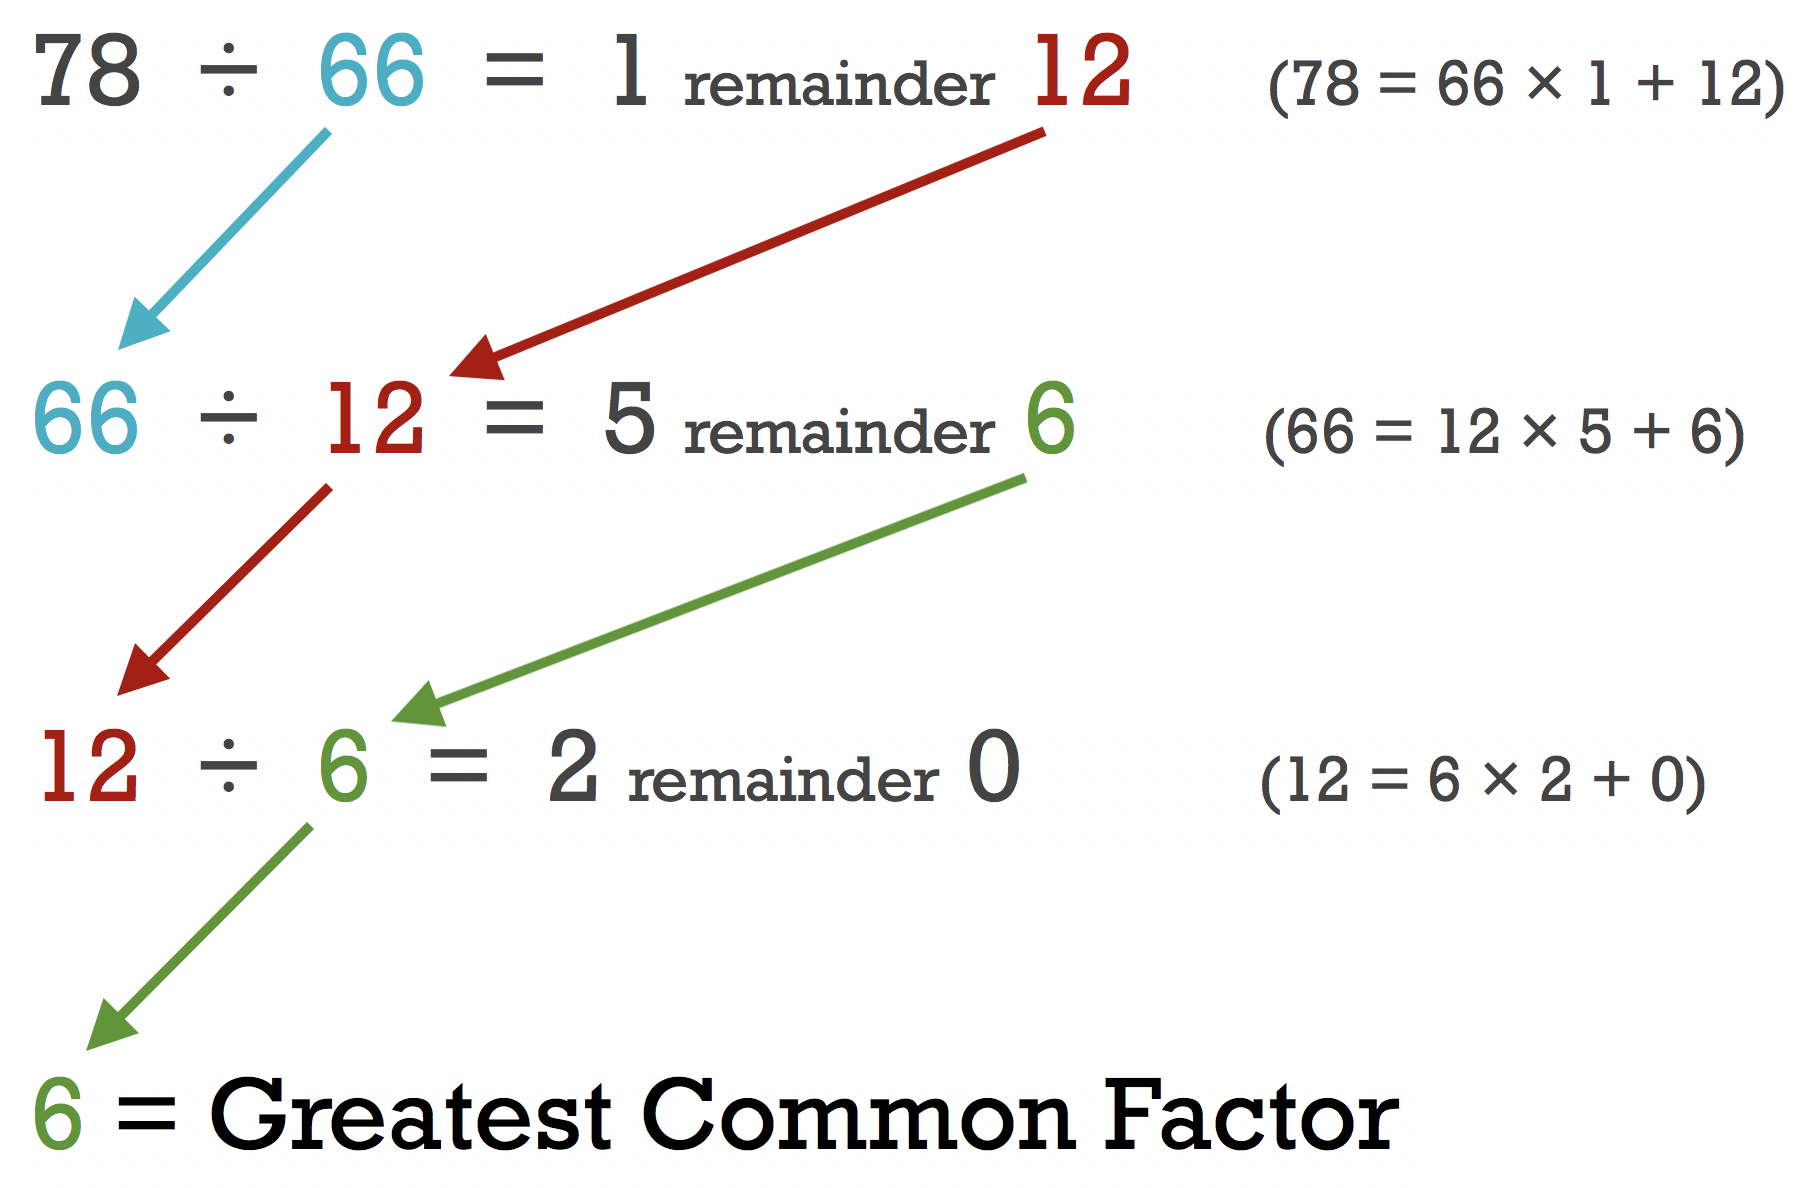 Greatest Common Factor Calculator